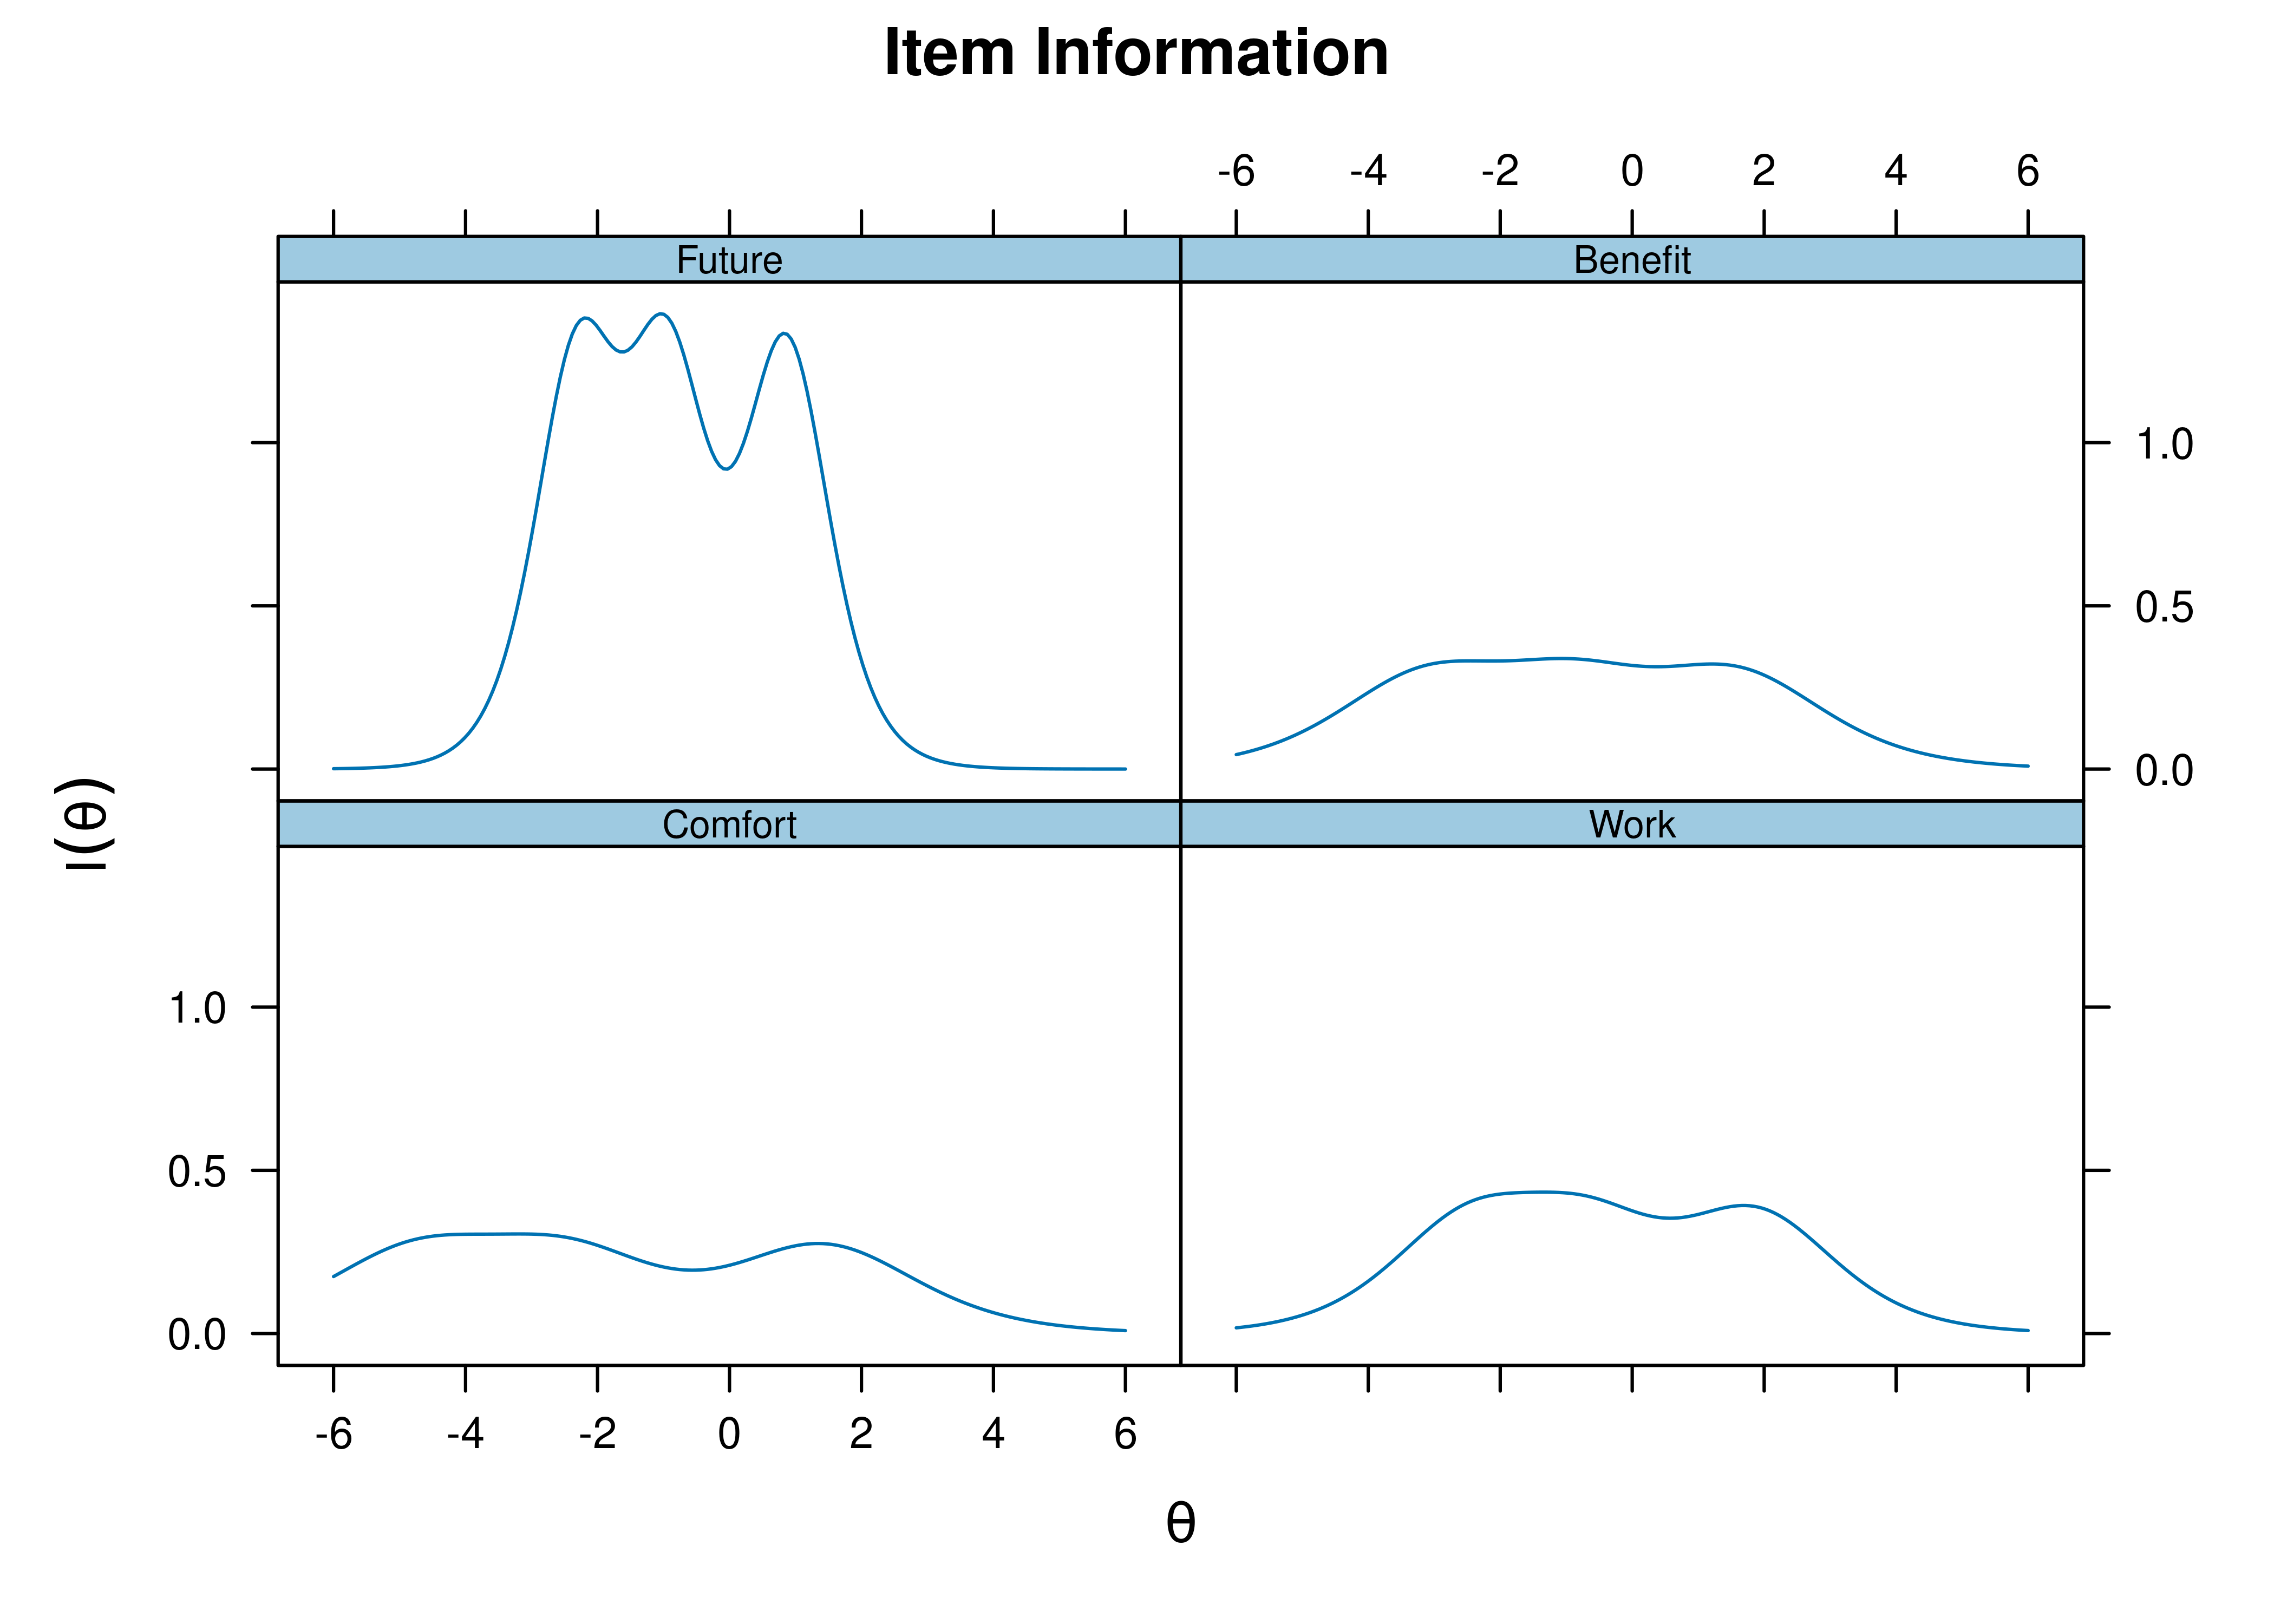 Item Information Curves From Graded Response Model.